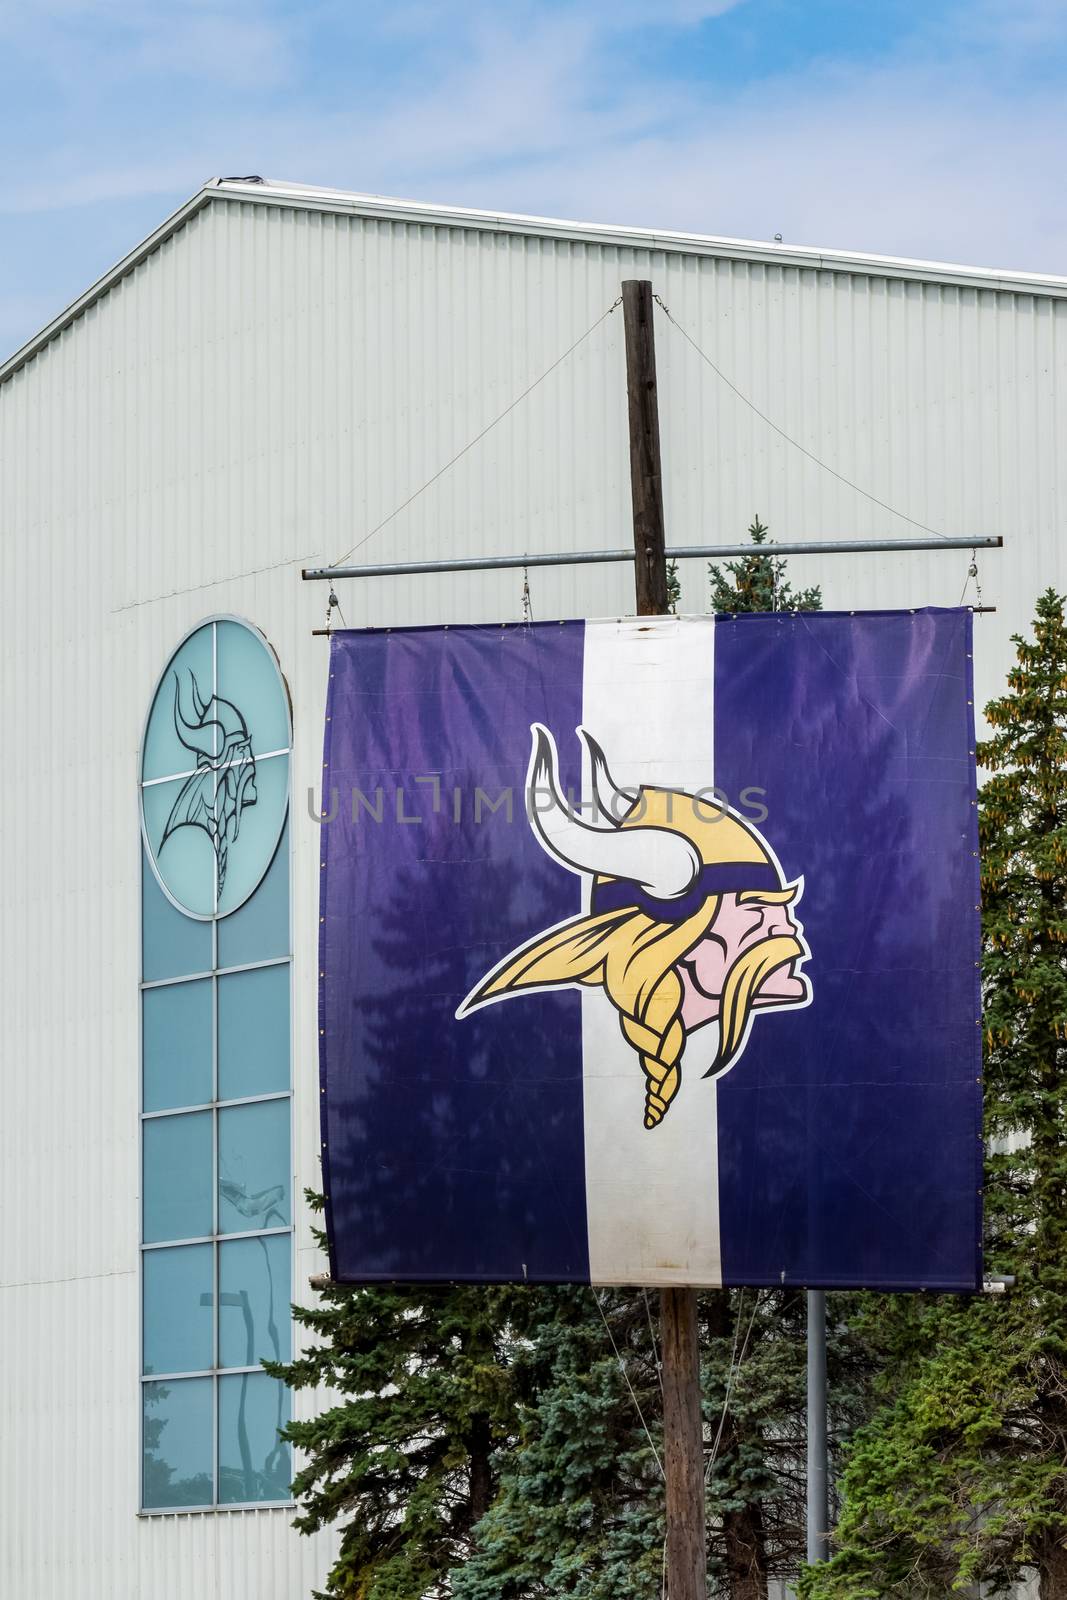 EDEN PRAIRIE, MN/USA - August 13, 2015: Minnesota Vikings practice facility and flag. The Minnesota Vikings are a professional American football team based in Minneapolis, Minnesota.